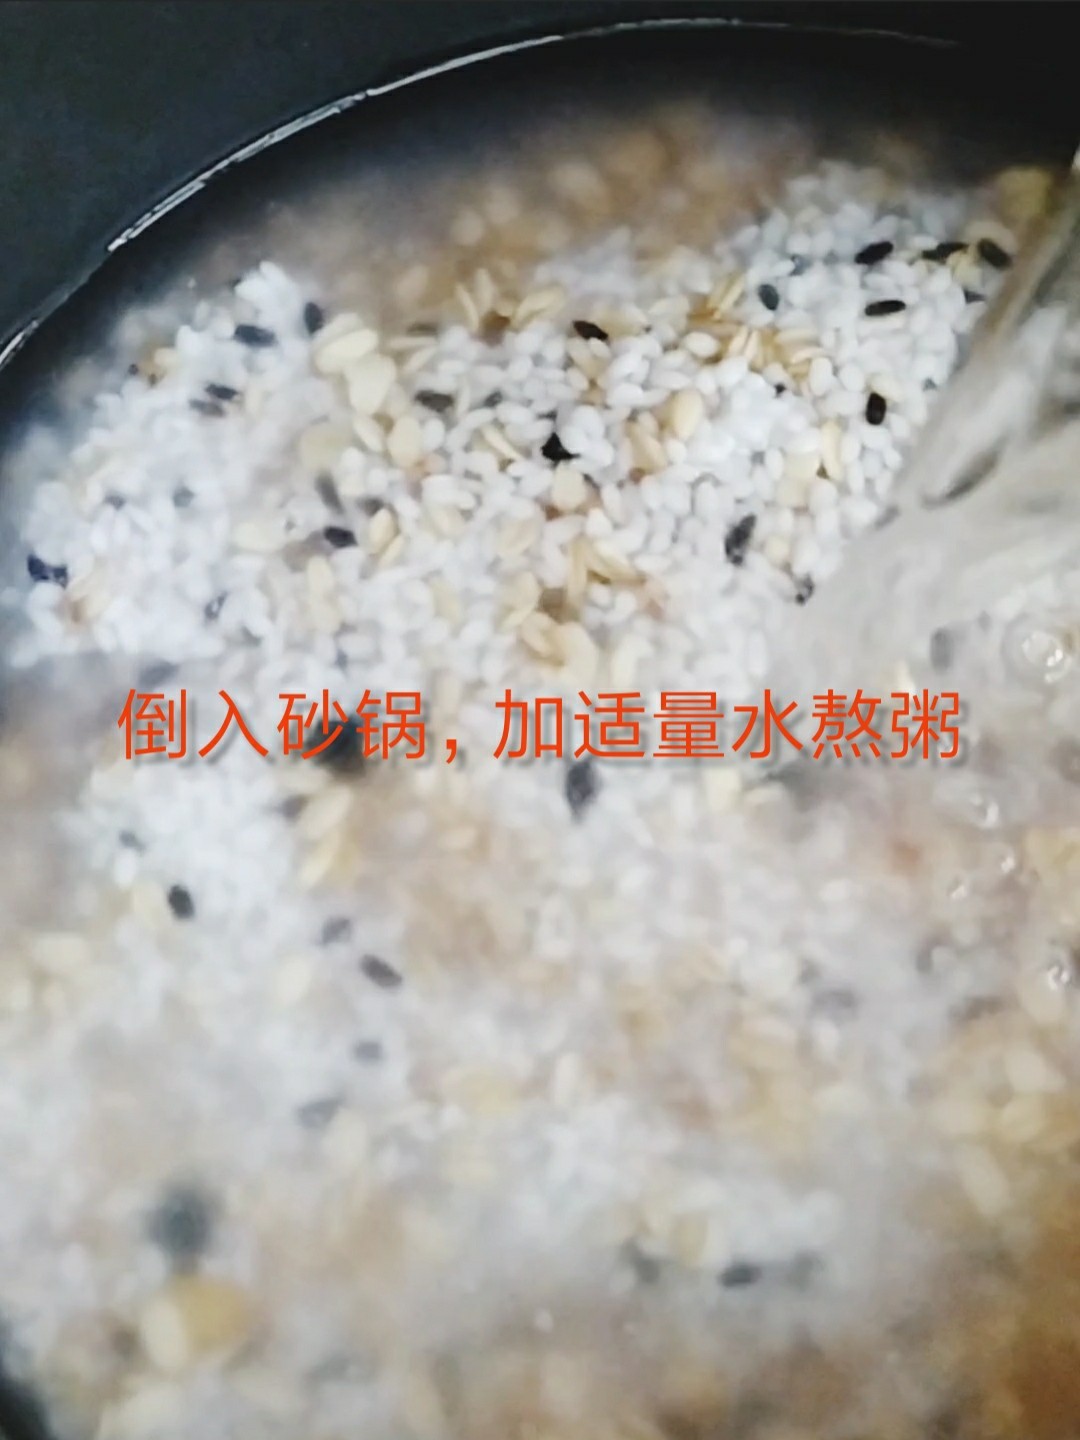 Nourishing and Warming Stomach Porridge: Raw Fish Slices and Five Grain Porridge recipe